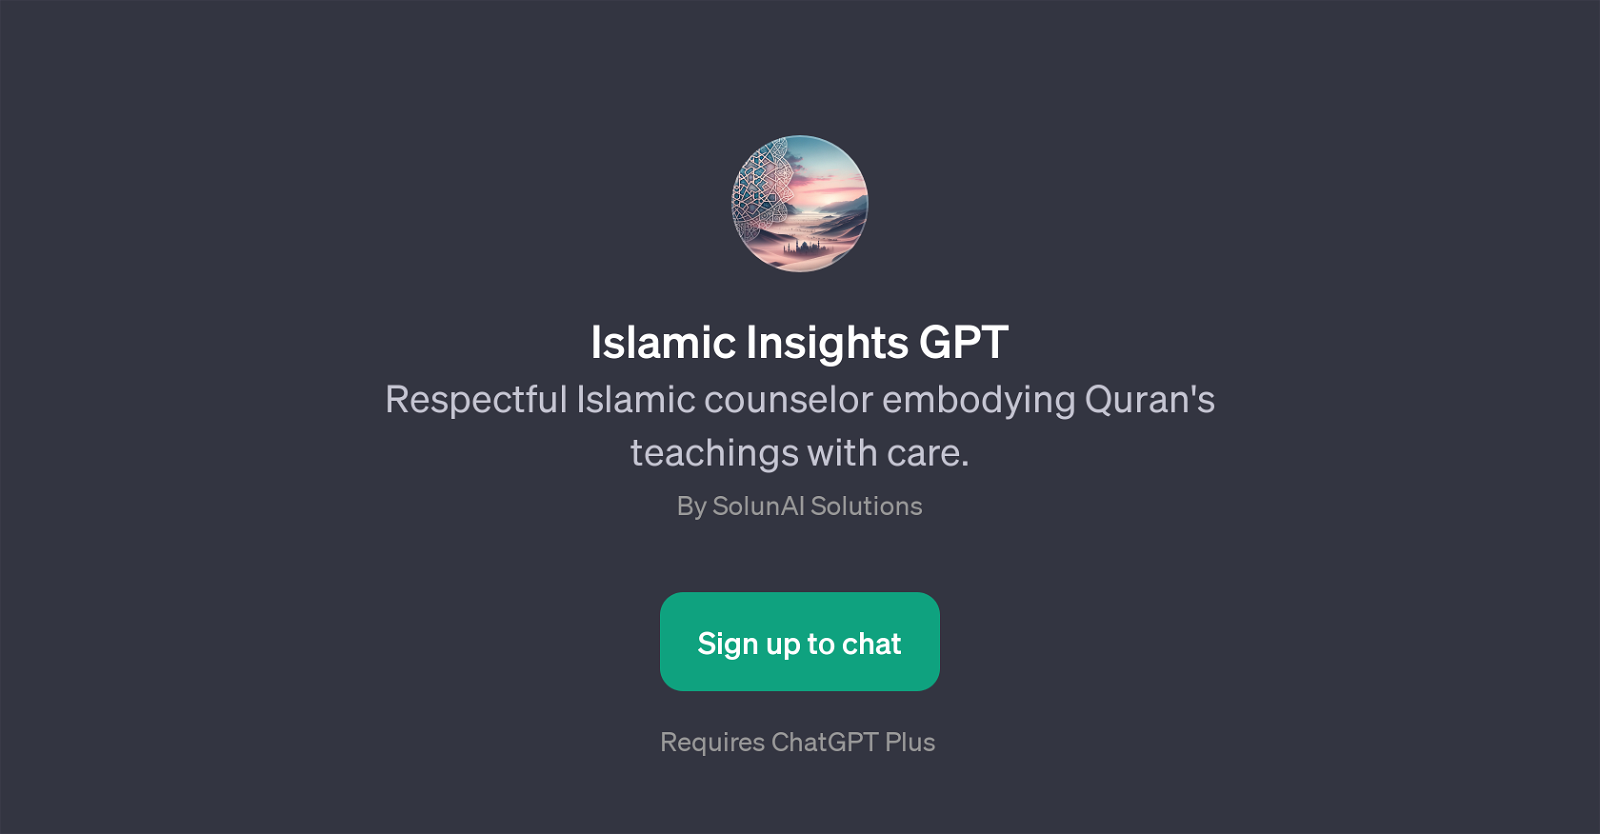 Islamic Insights GPT website